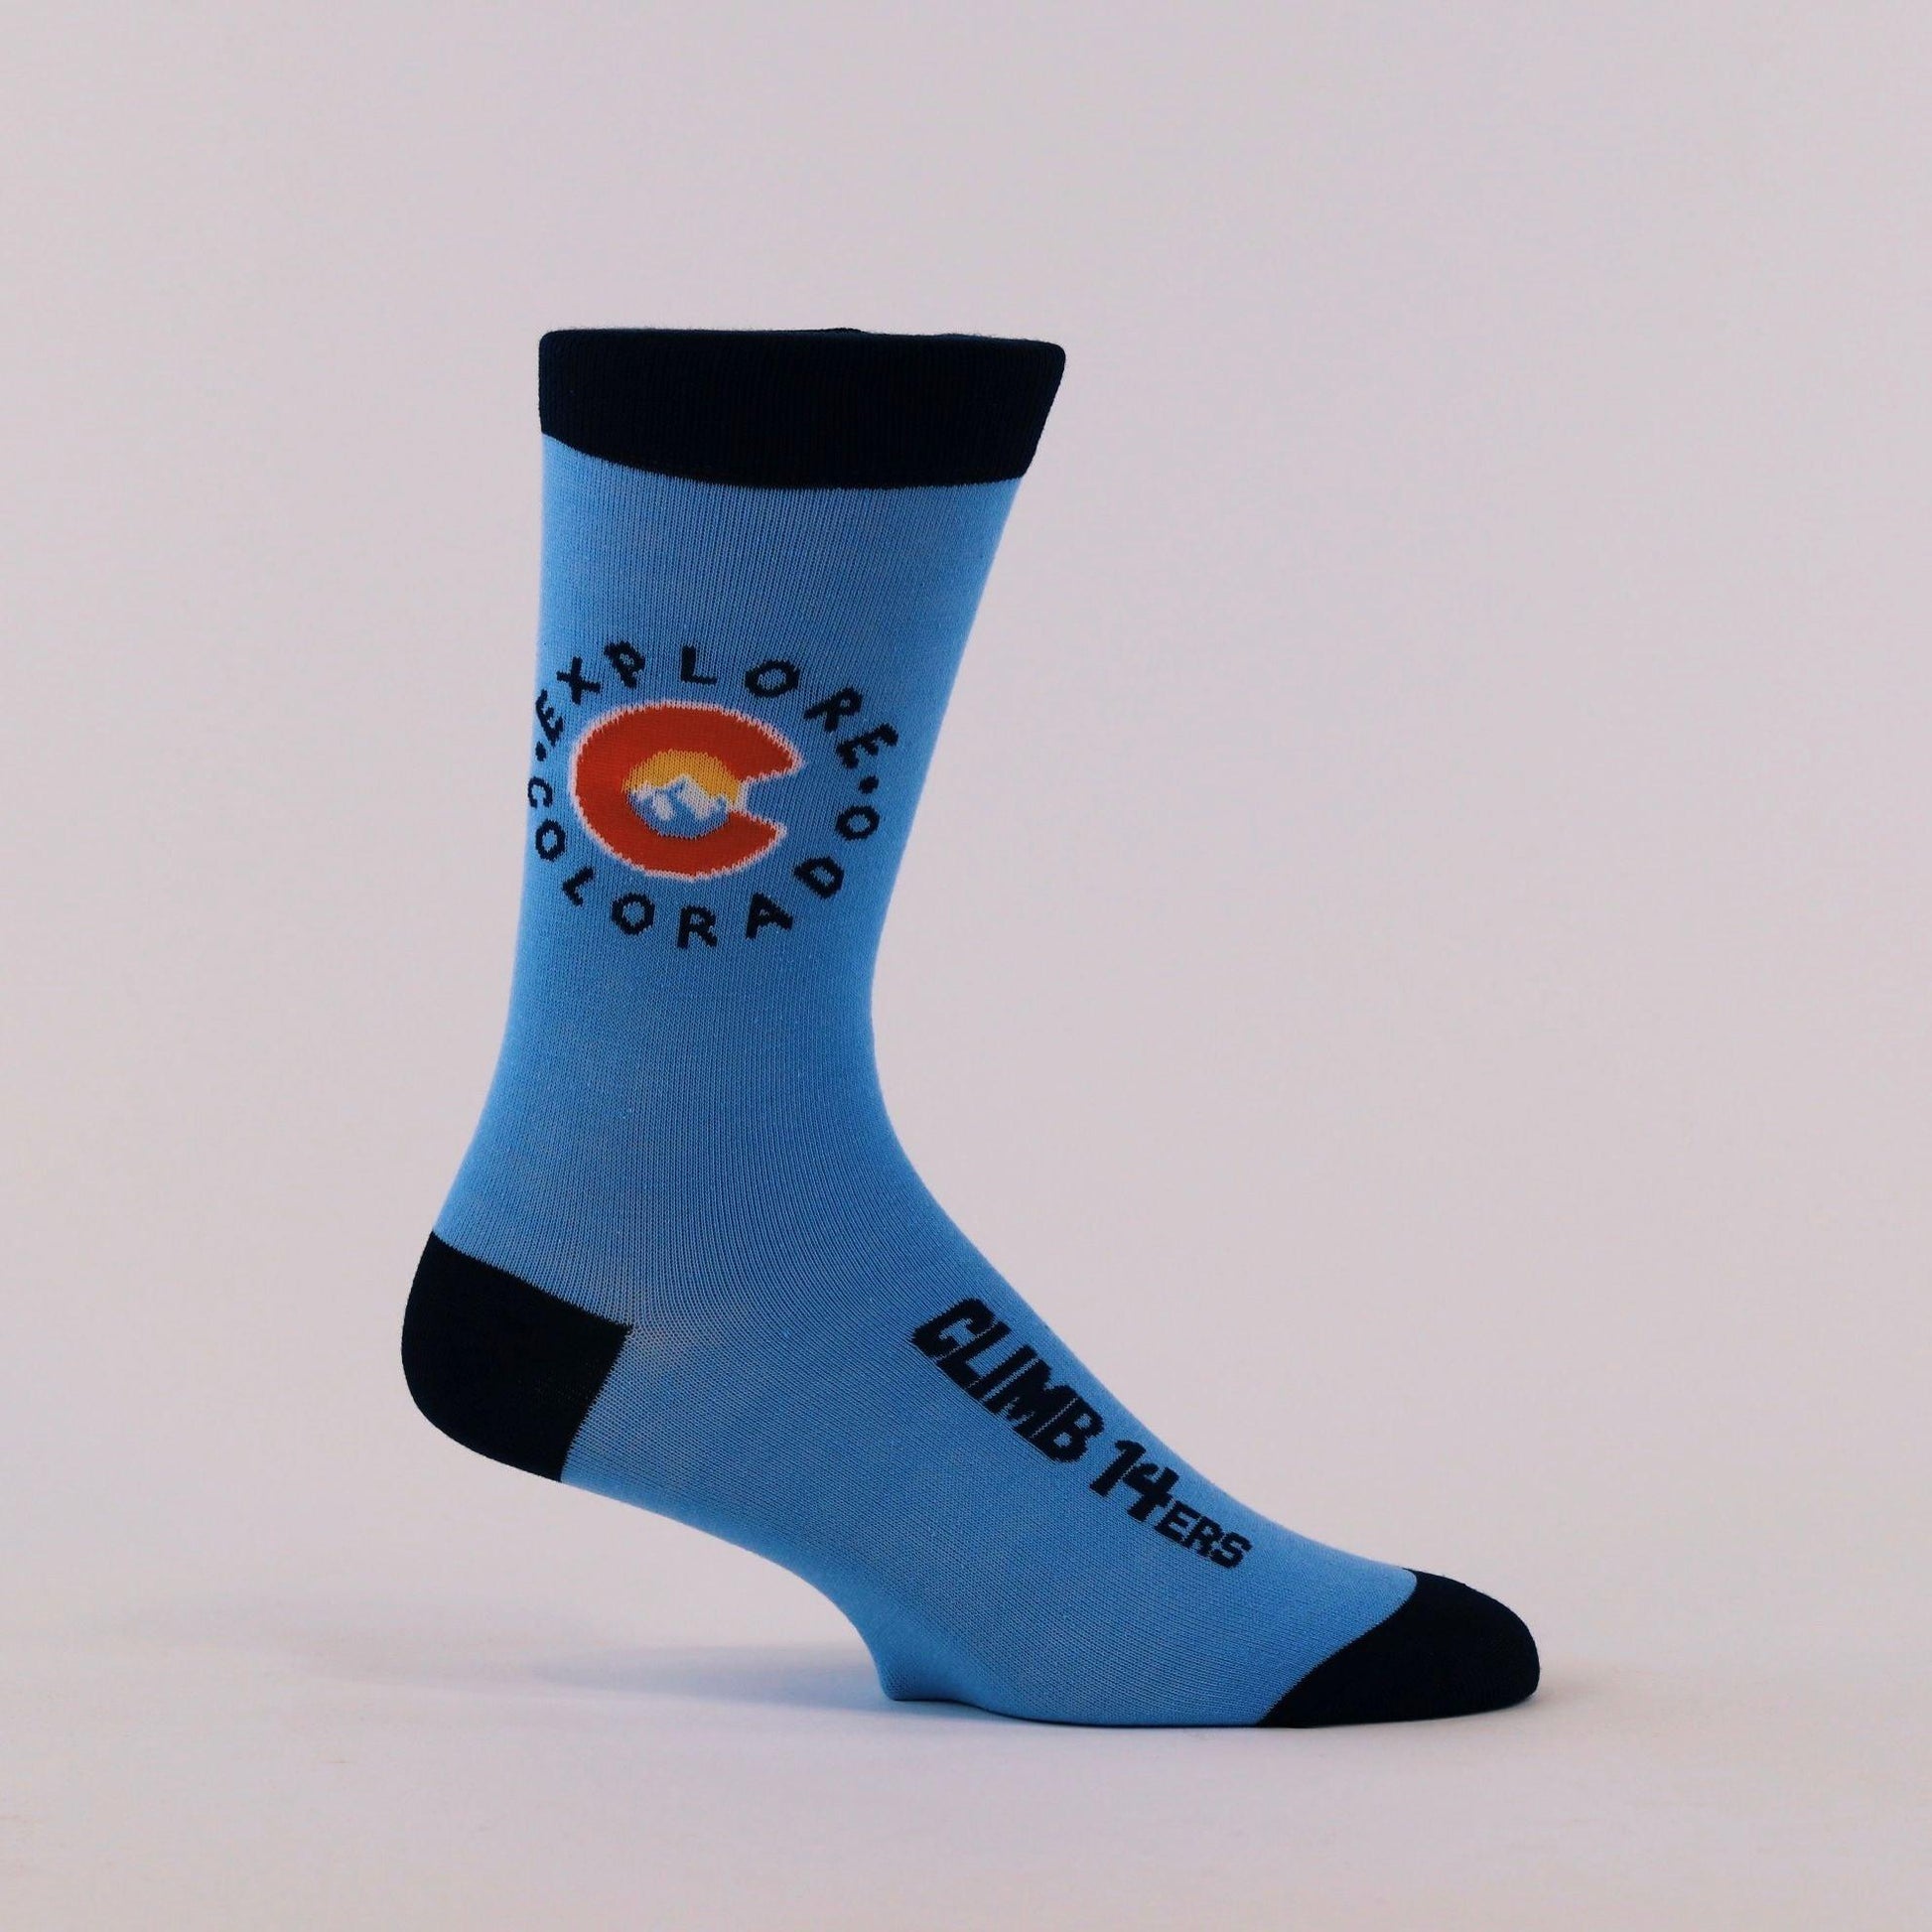 Colorado Explore Socks - Love From USA